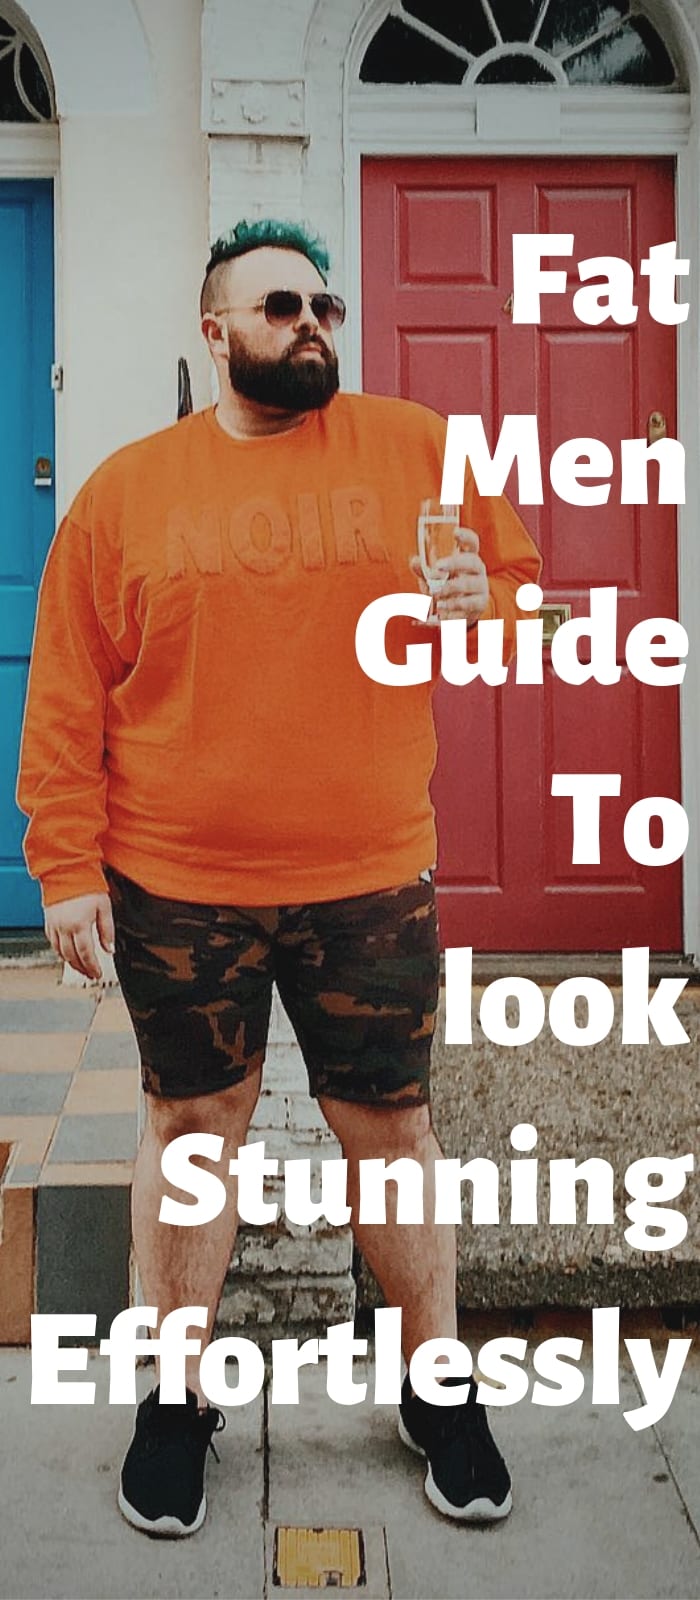 Fat Men Guide To look Stunning Effortlessly!